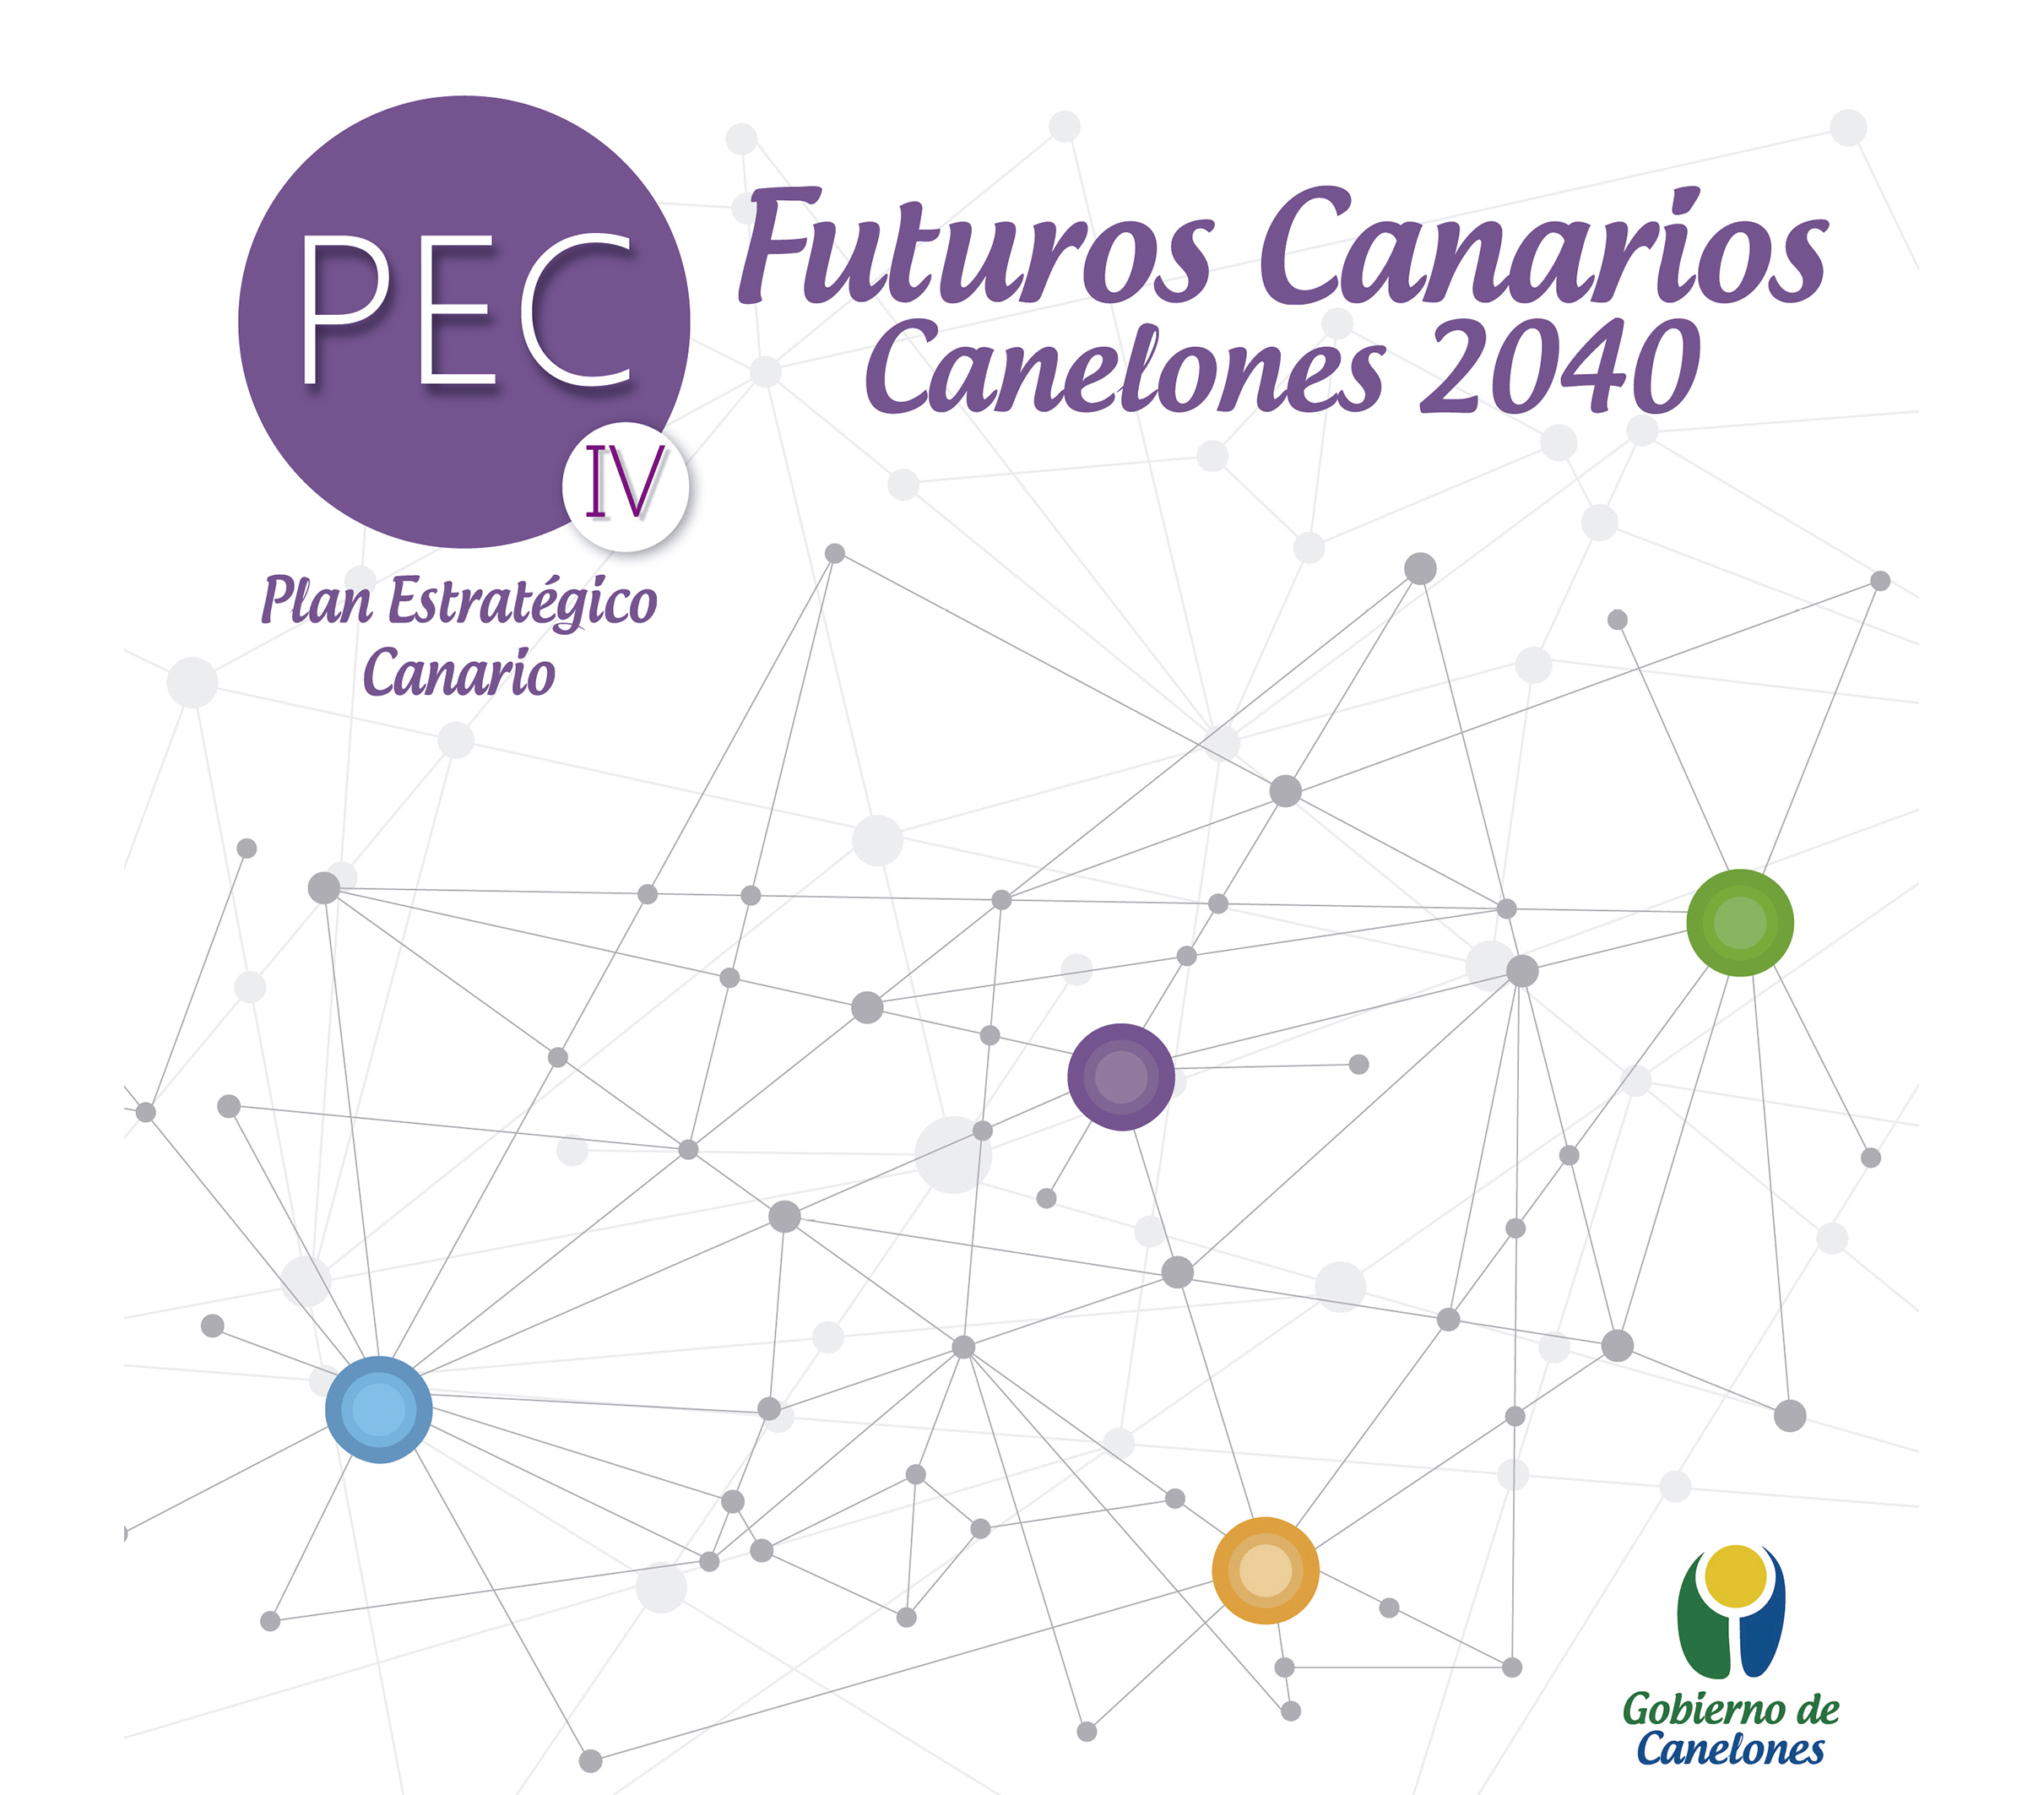 Plan Estratégico Canario IV Futuros Canarios, Canelones 2040